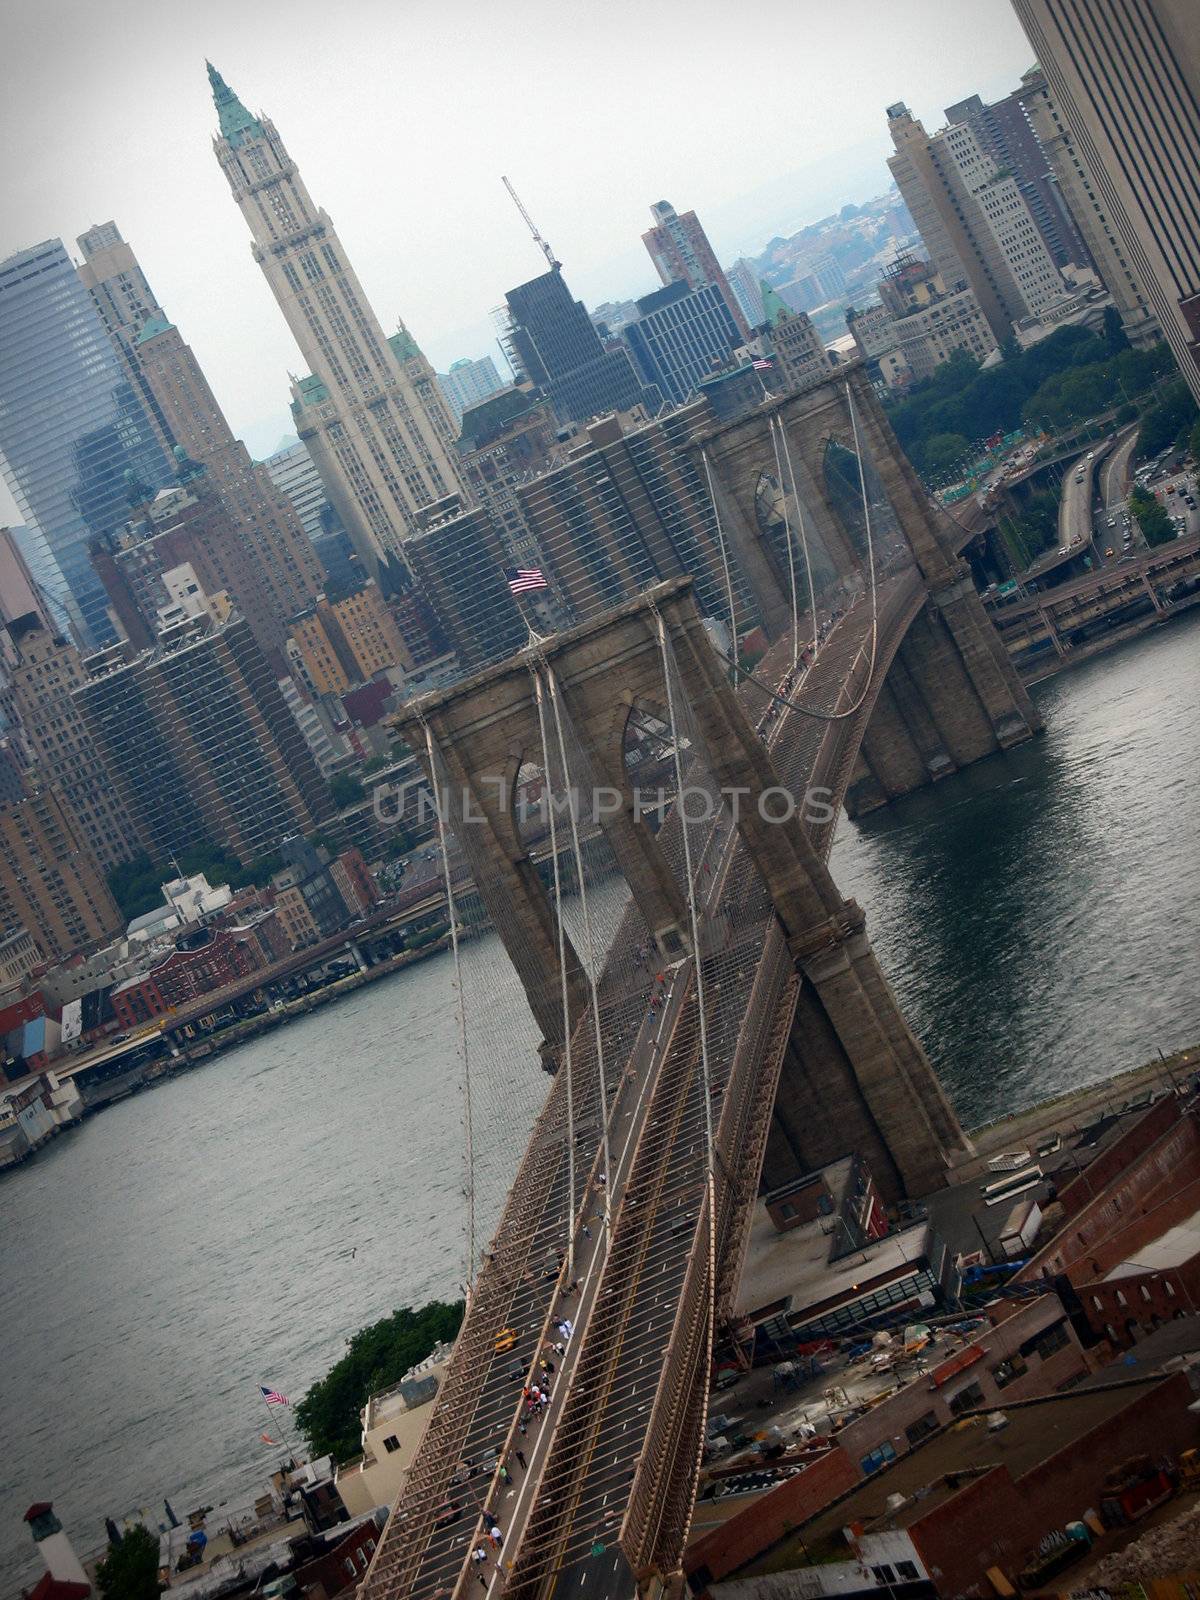 A shot of the Brooklyn Bridge in NYC.